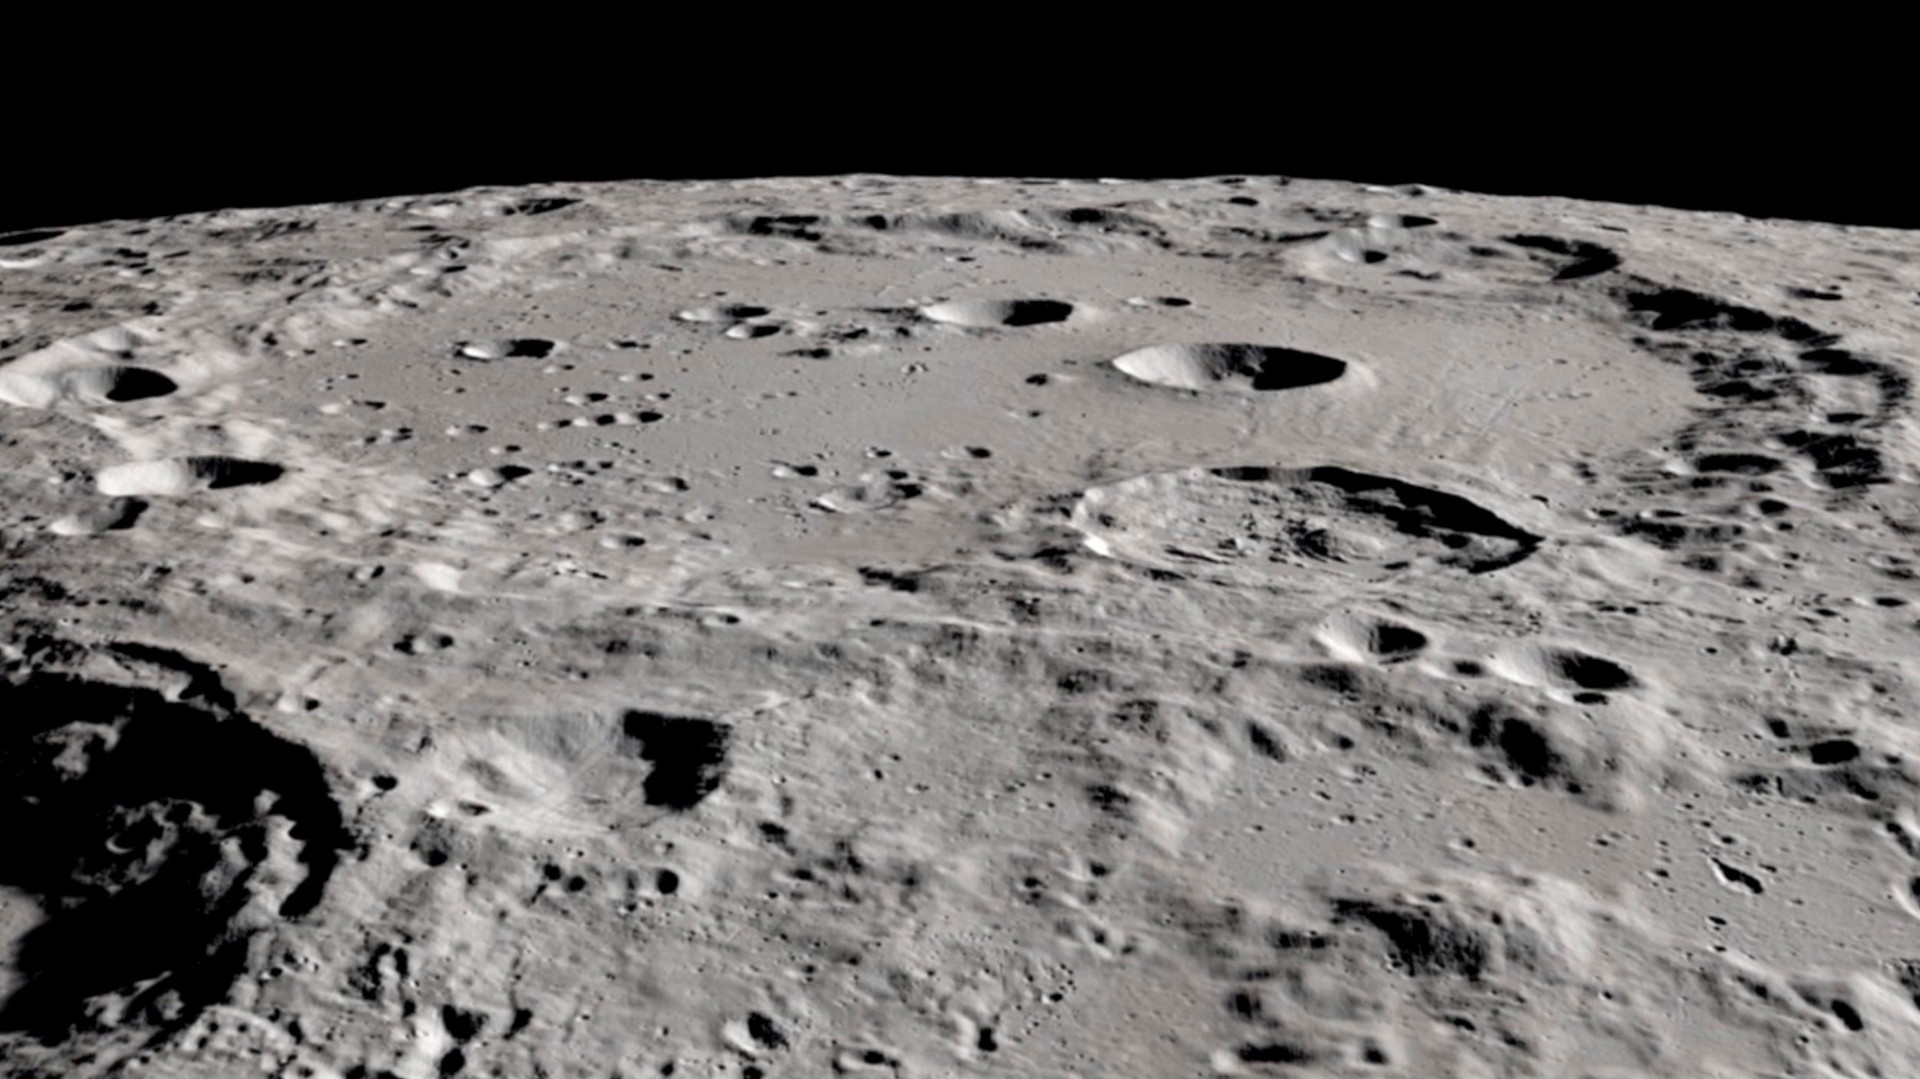 water-moon-crater-nasa_wide-3343c41146d500f46e59a2c761befadd33da0e0e.jpg